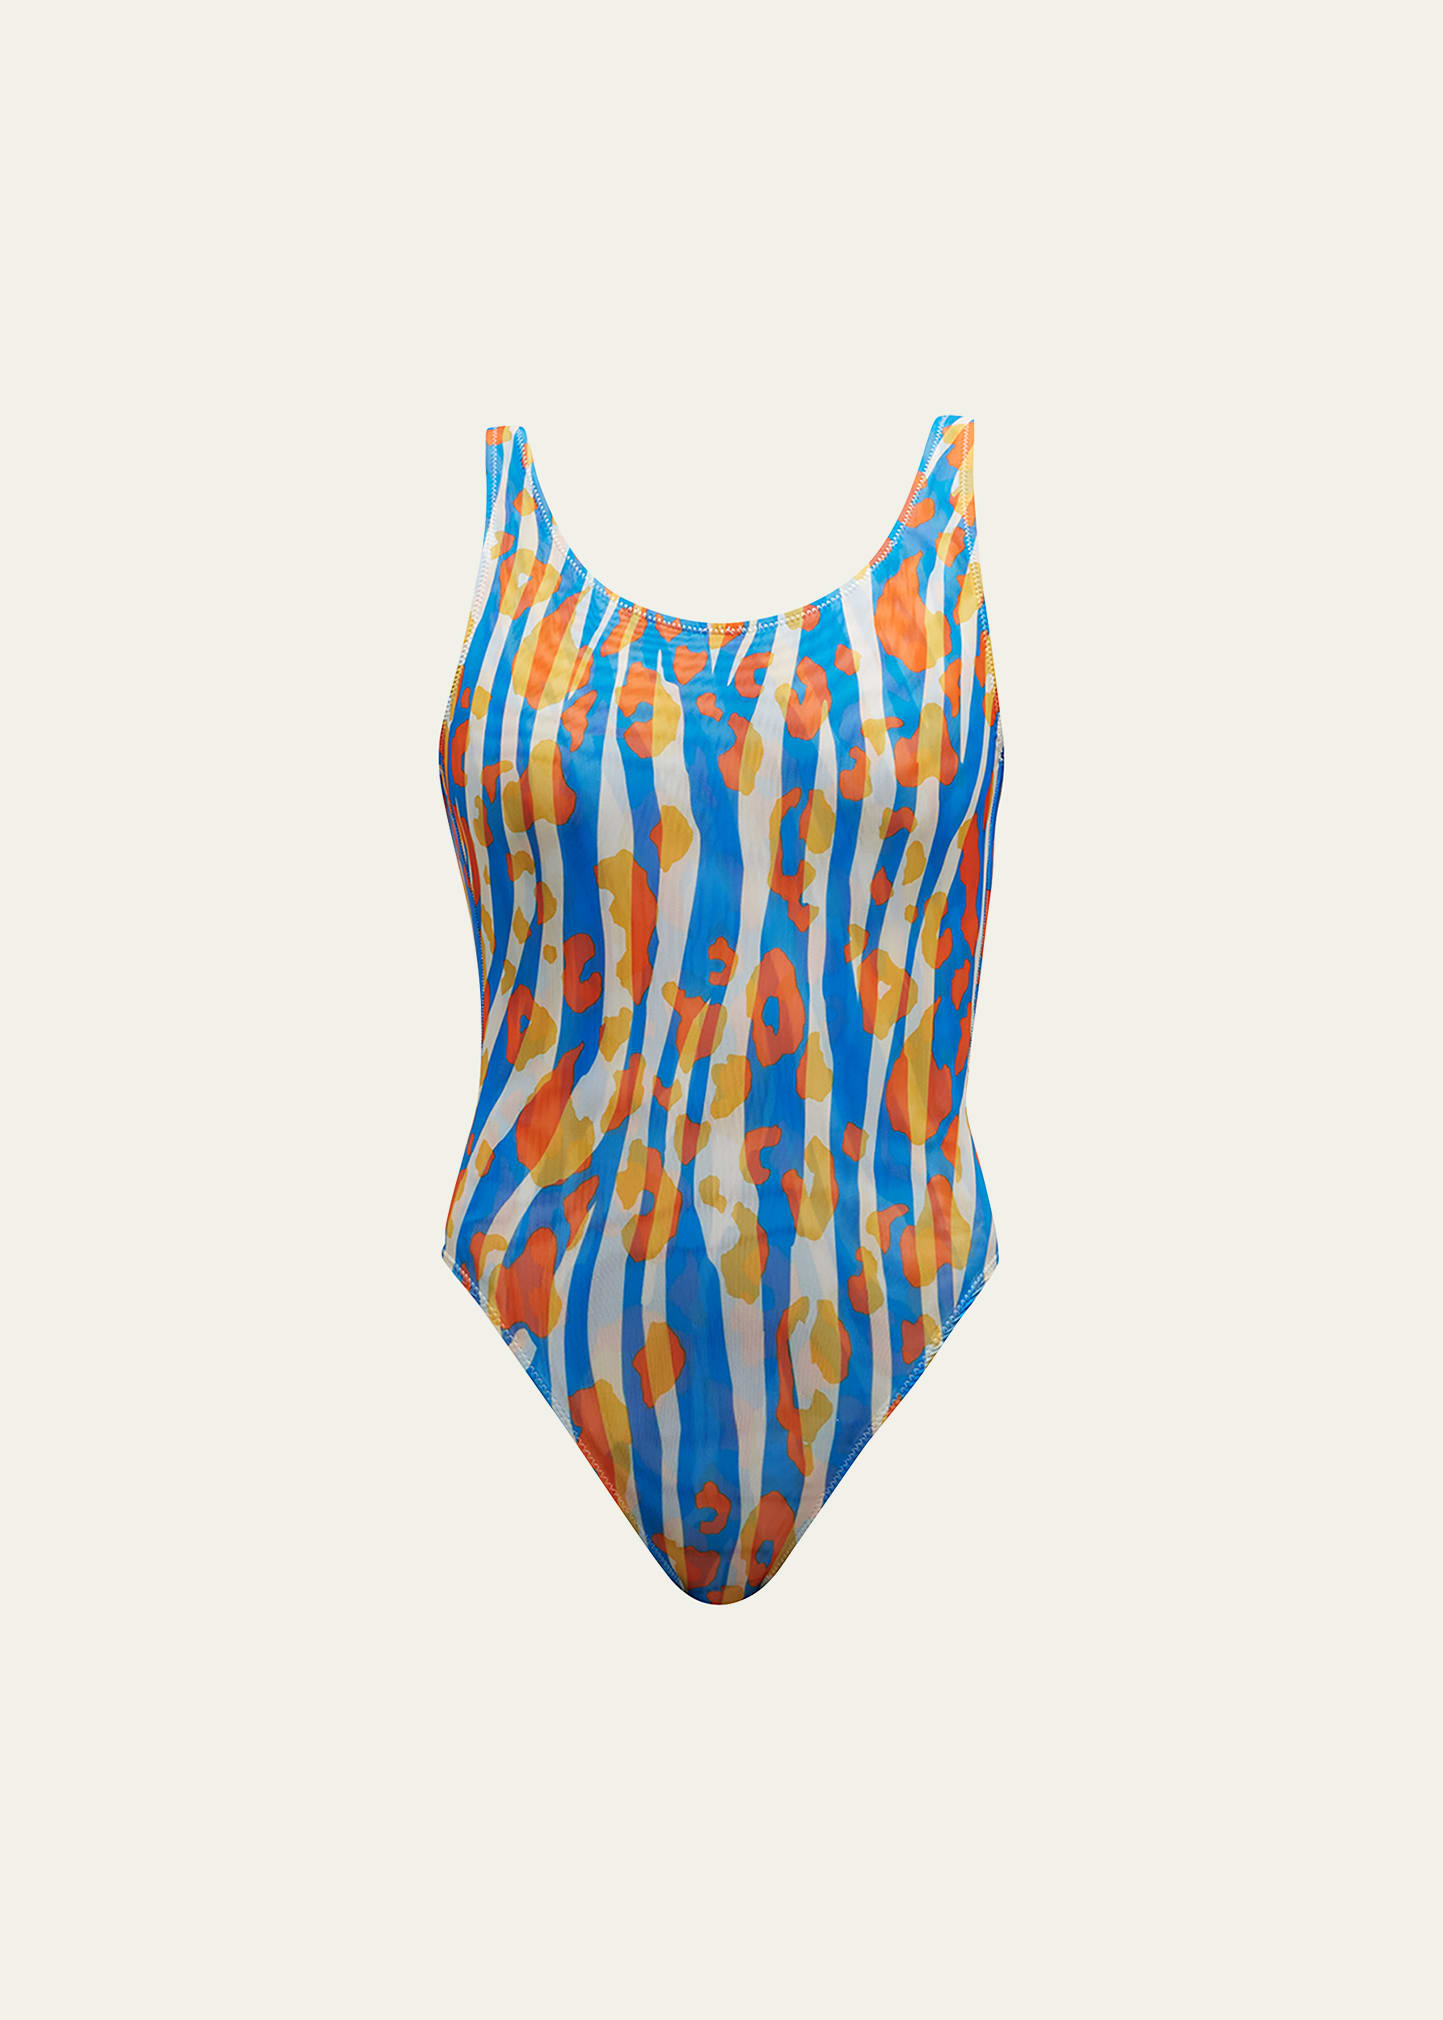 The Luela Leopard Zebra Printed Mesh One-Piece Swimsuit